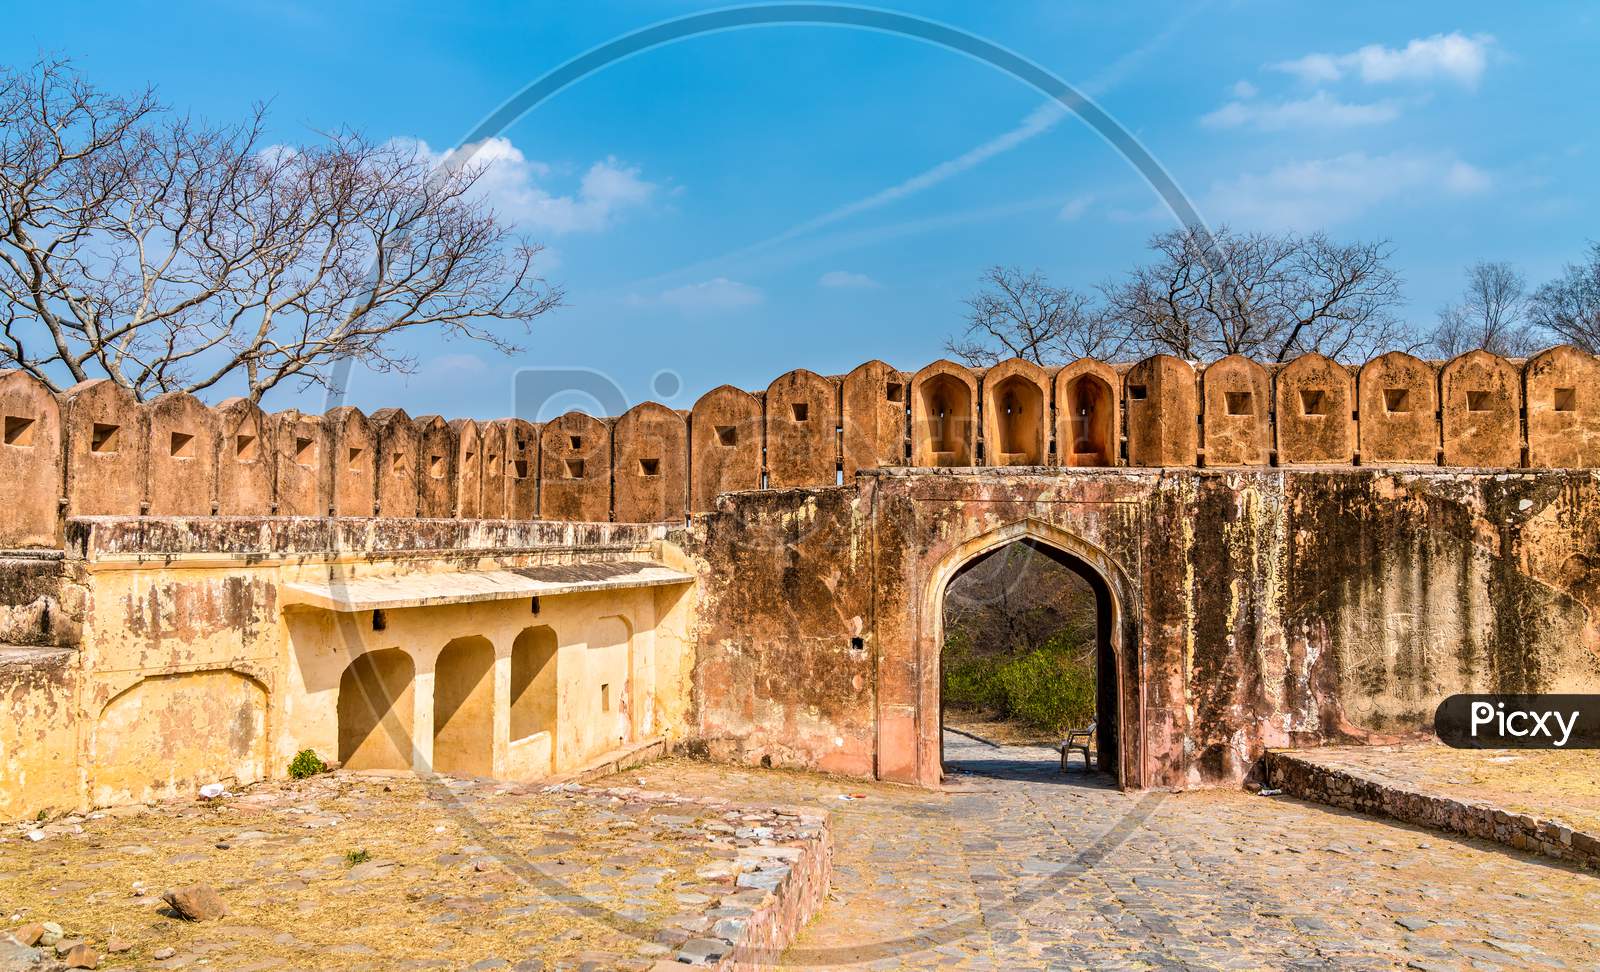 Gate Of Jaigarh Fort In Jaipur - Rajasthan, India